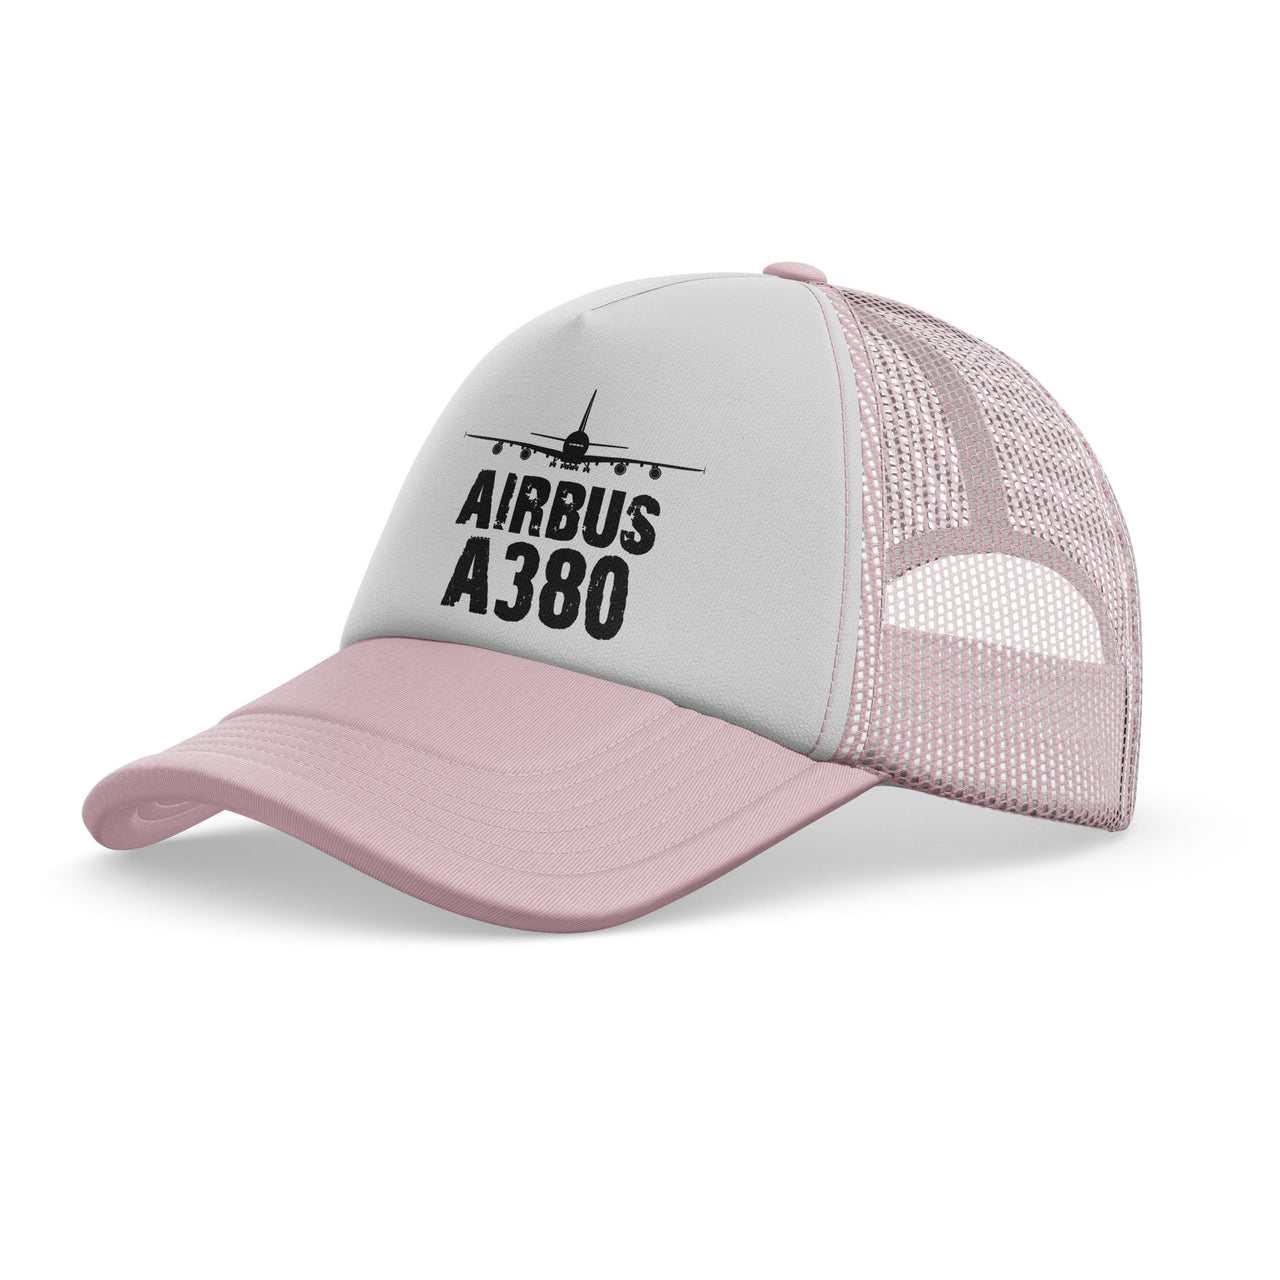 Airbus A380 & Plane Designed Trucker Caps & Hats